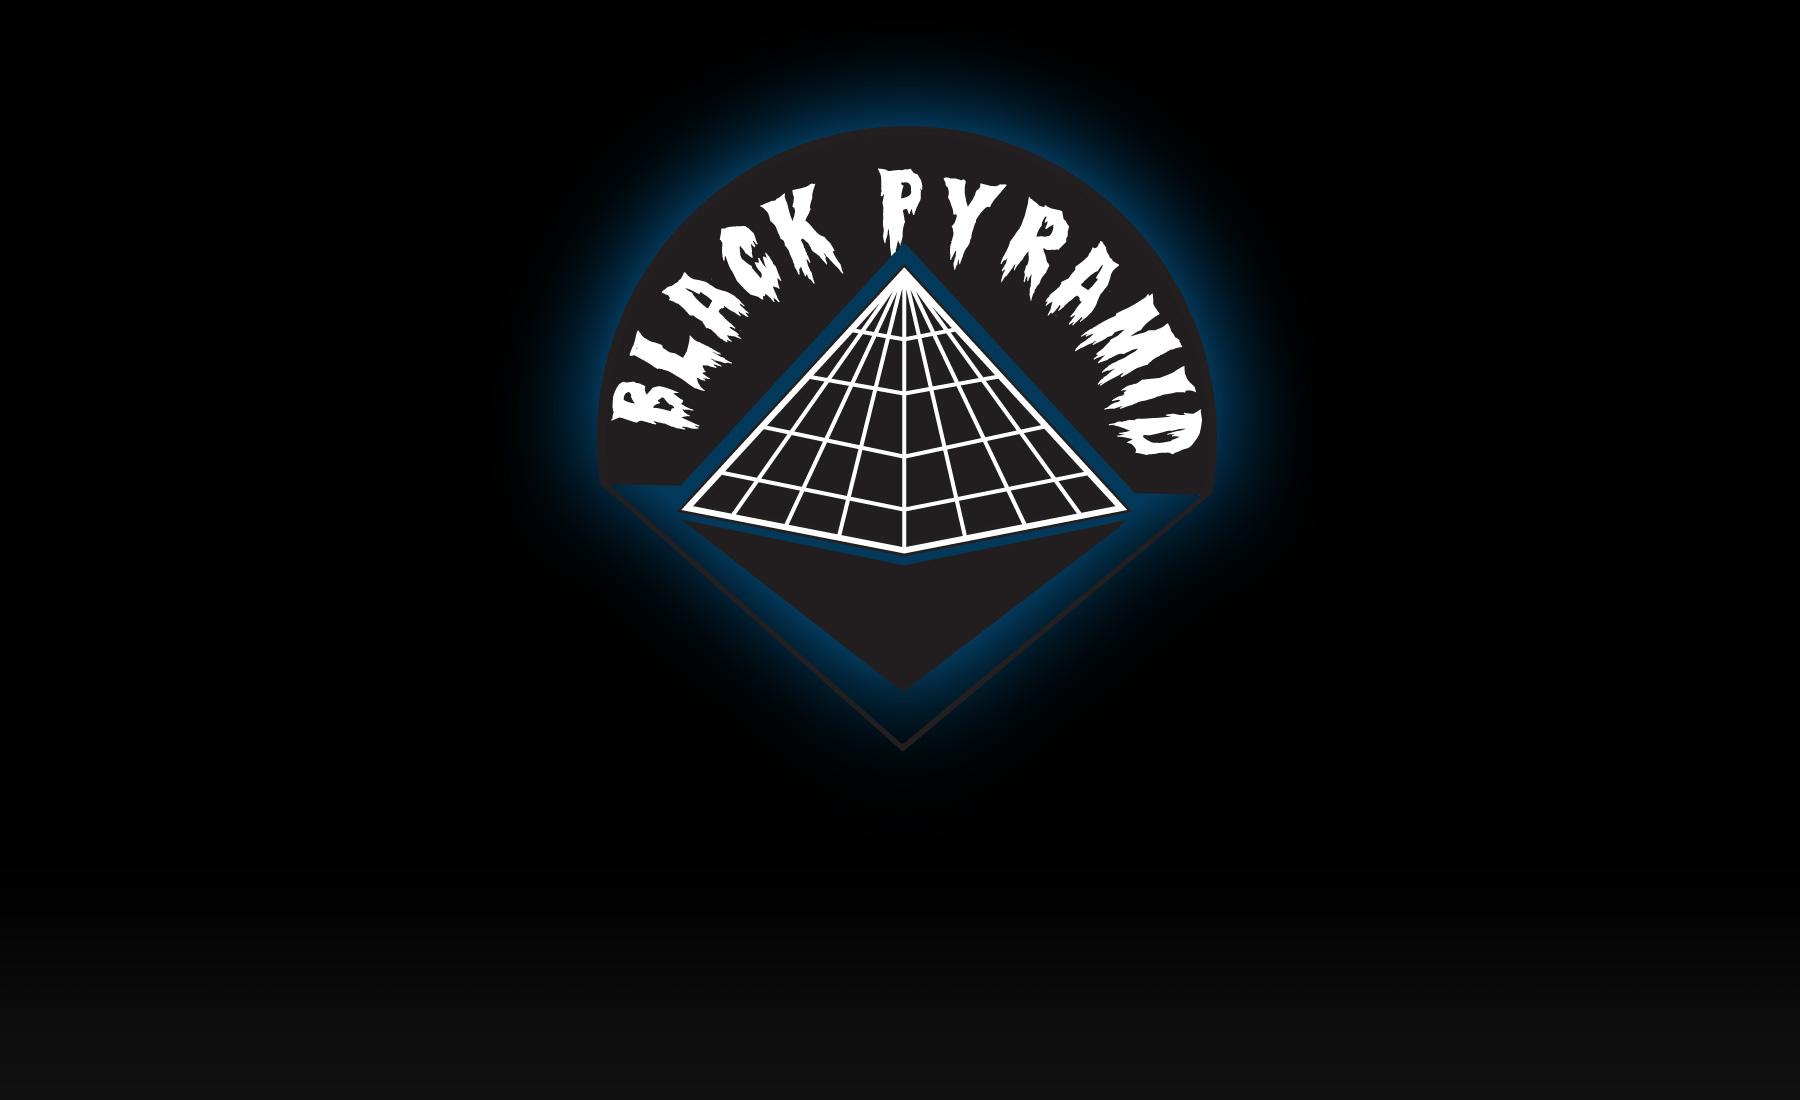 Black pyramid Logos